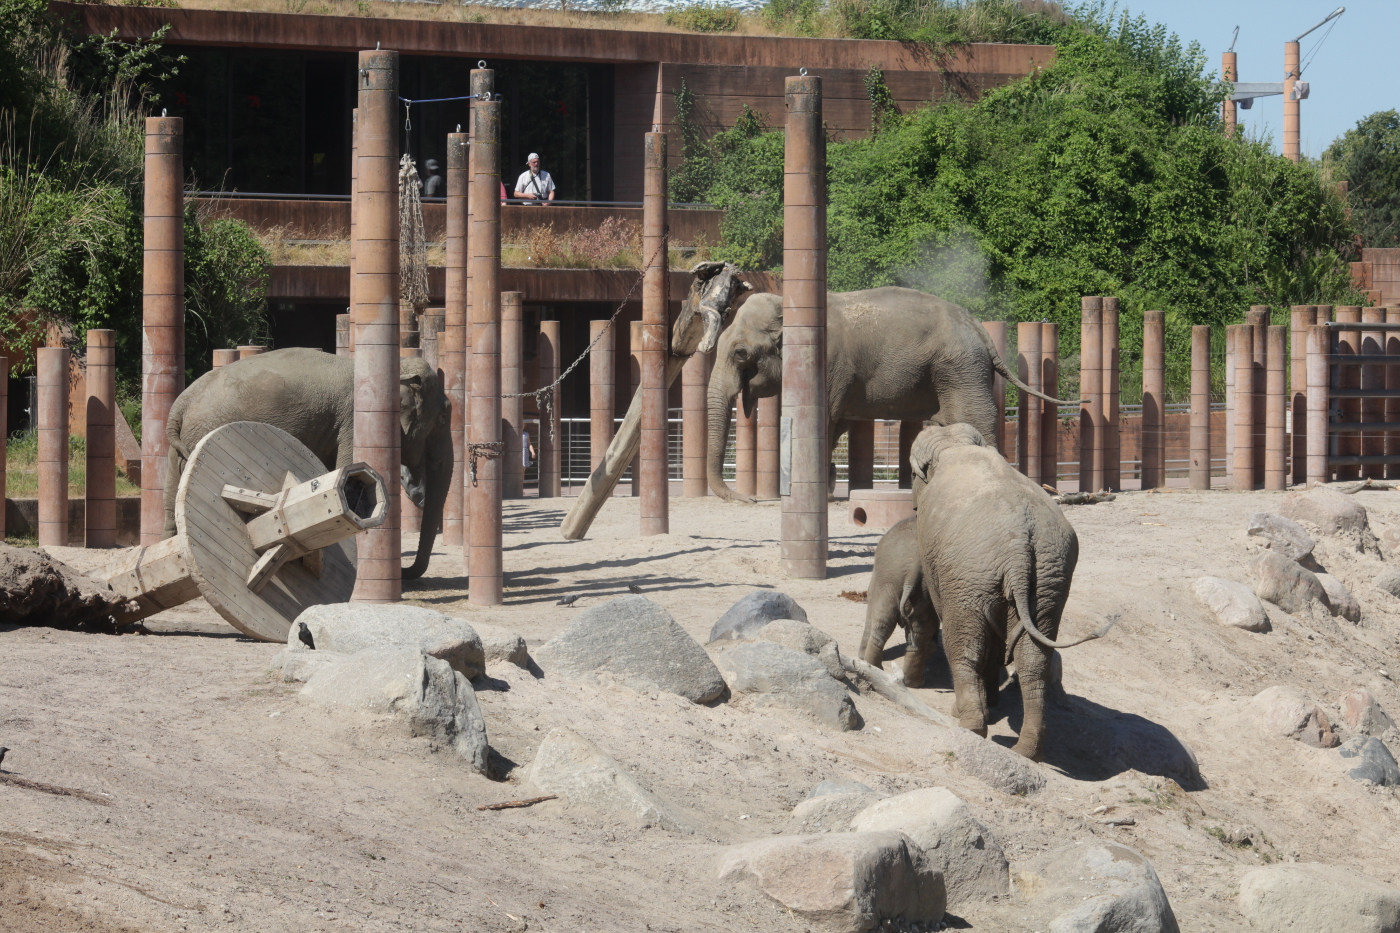 Elefanter i Zoo. Foto: Rolf Larsen.